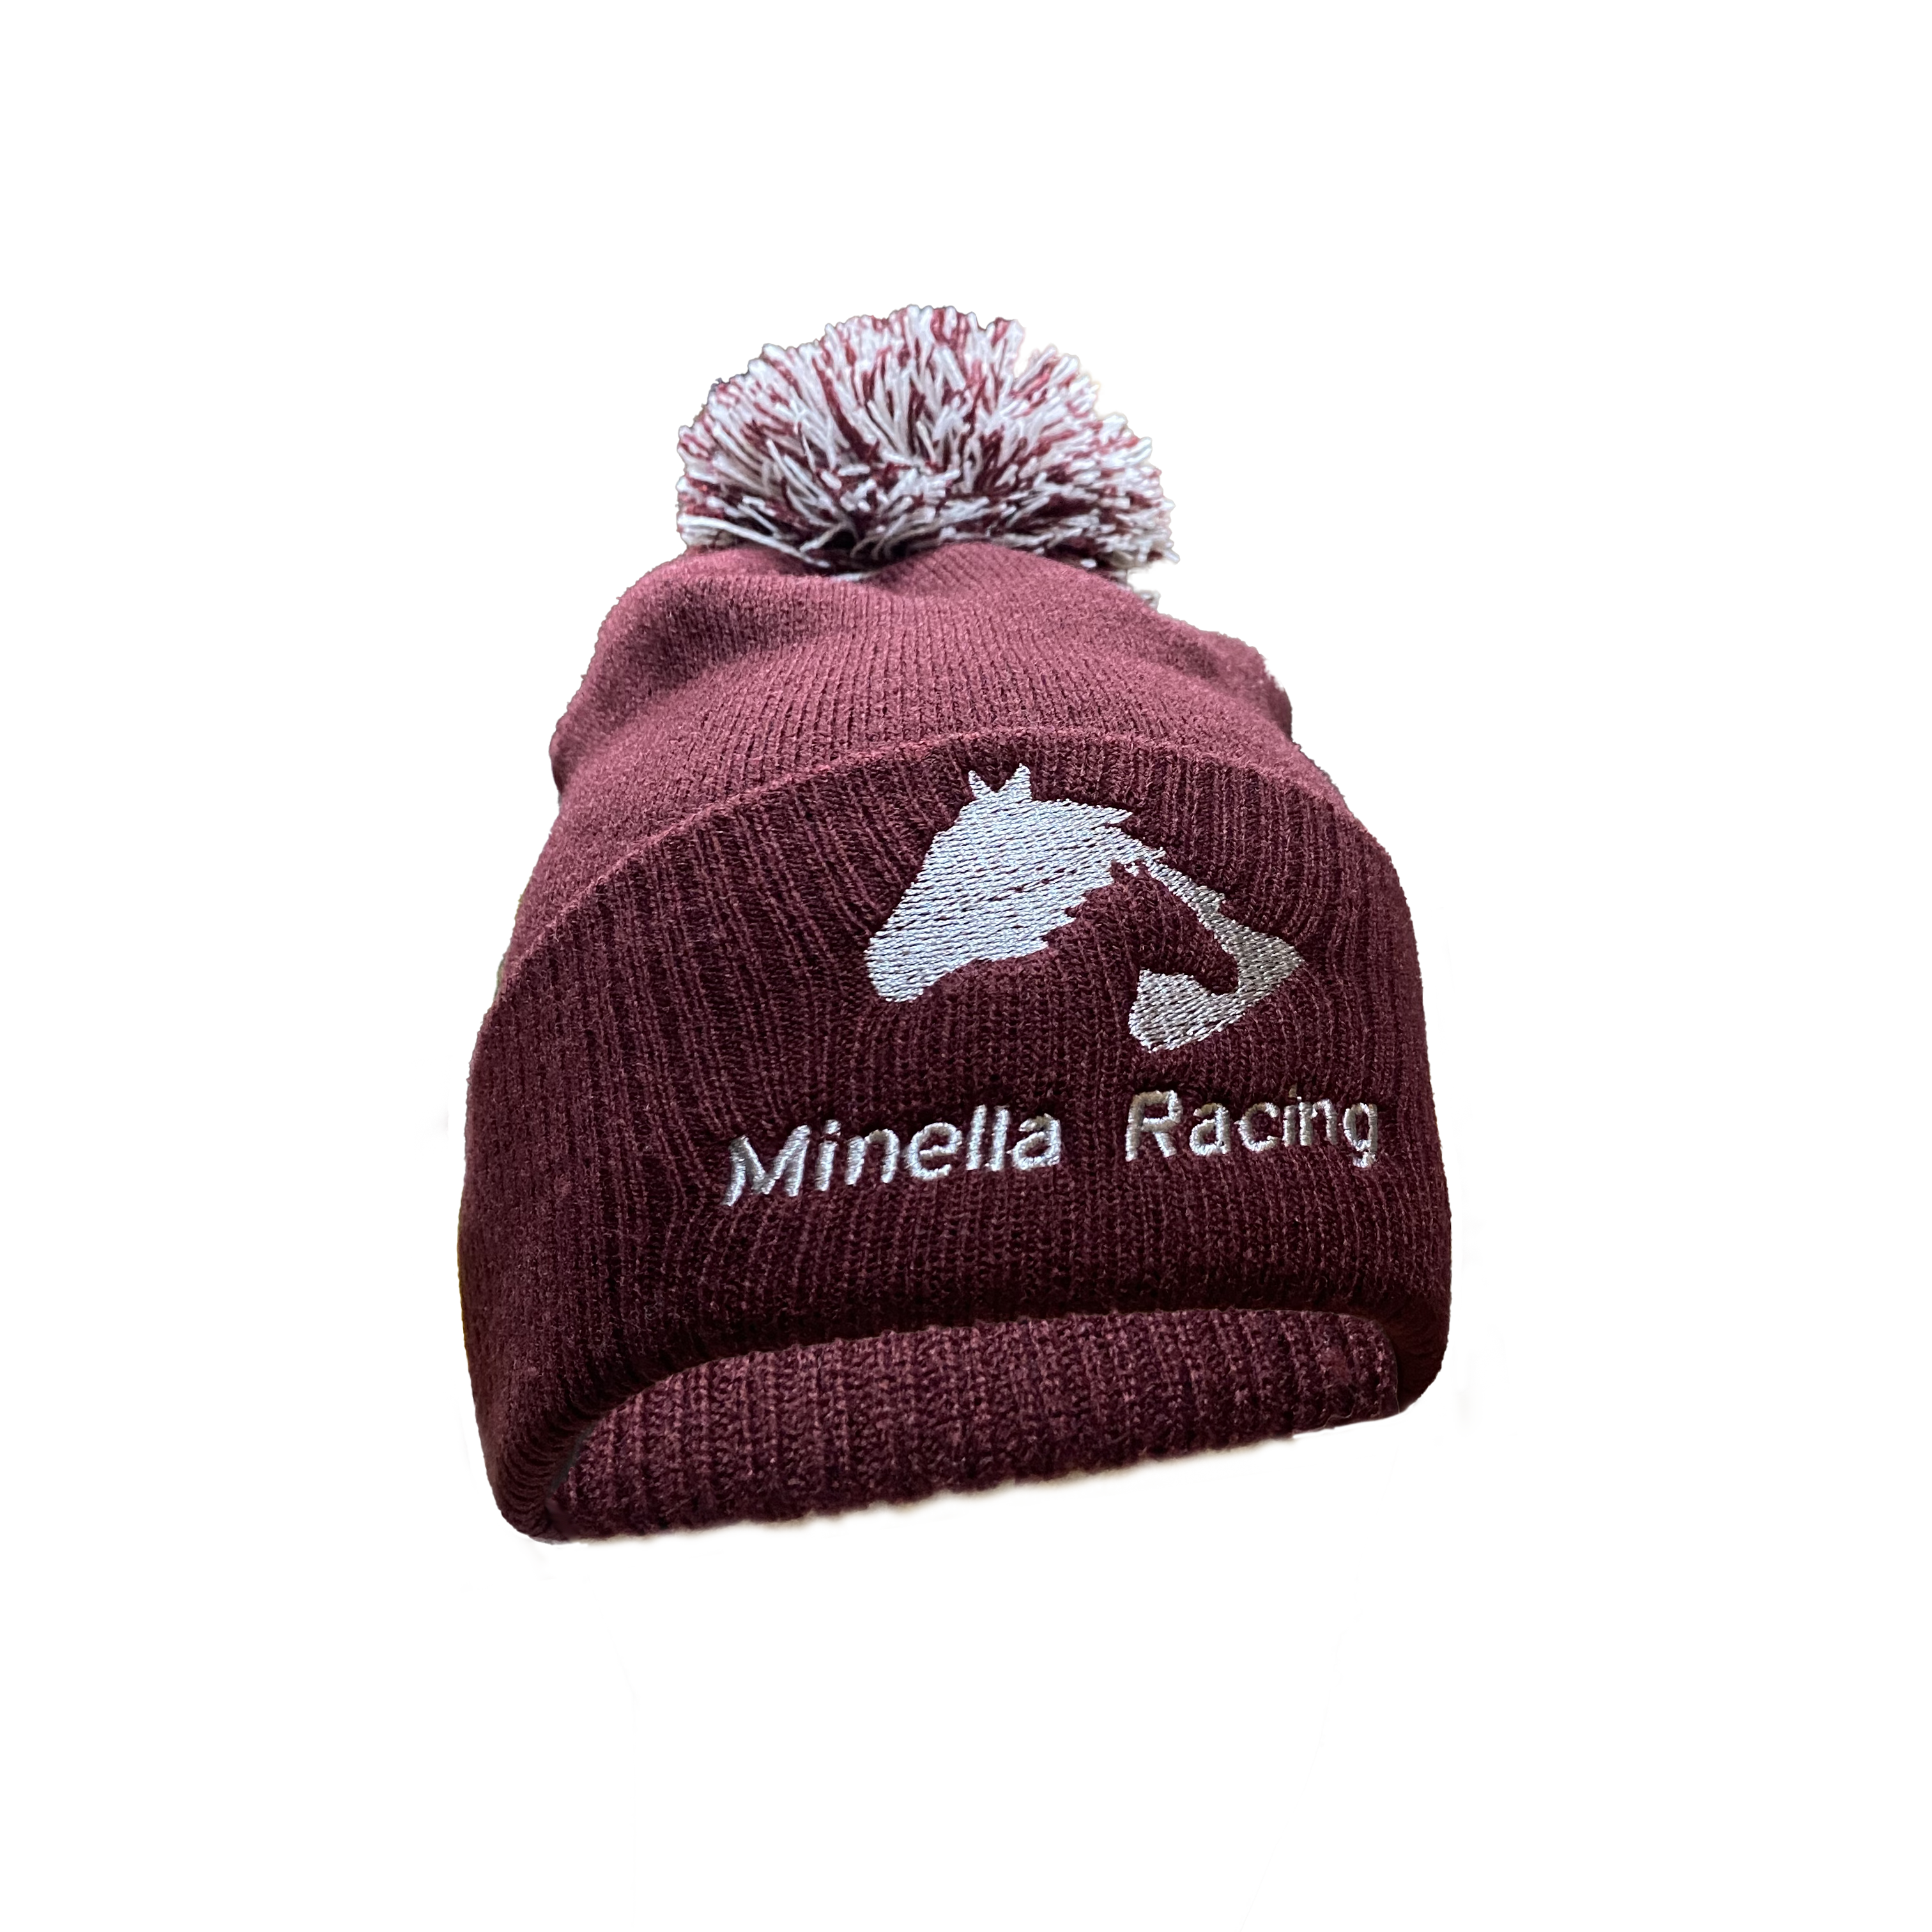 Minella Racing Bobble Hat